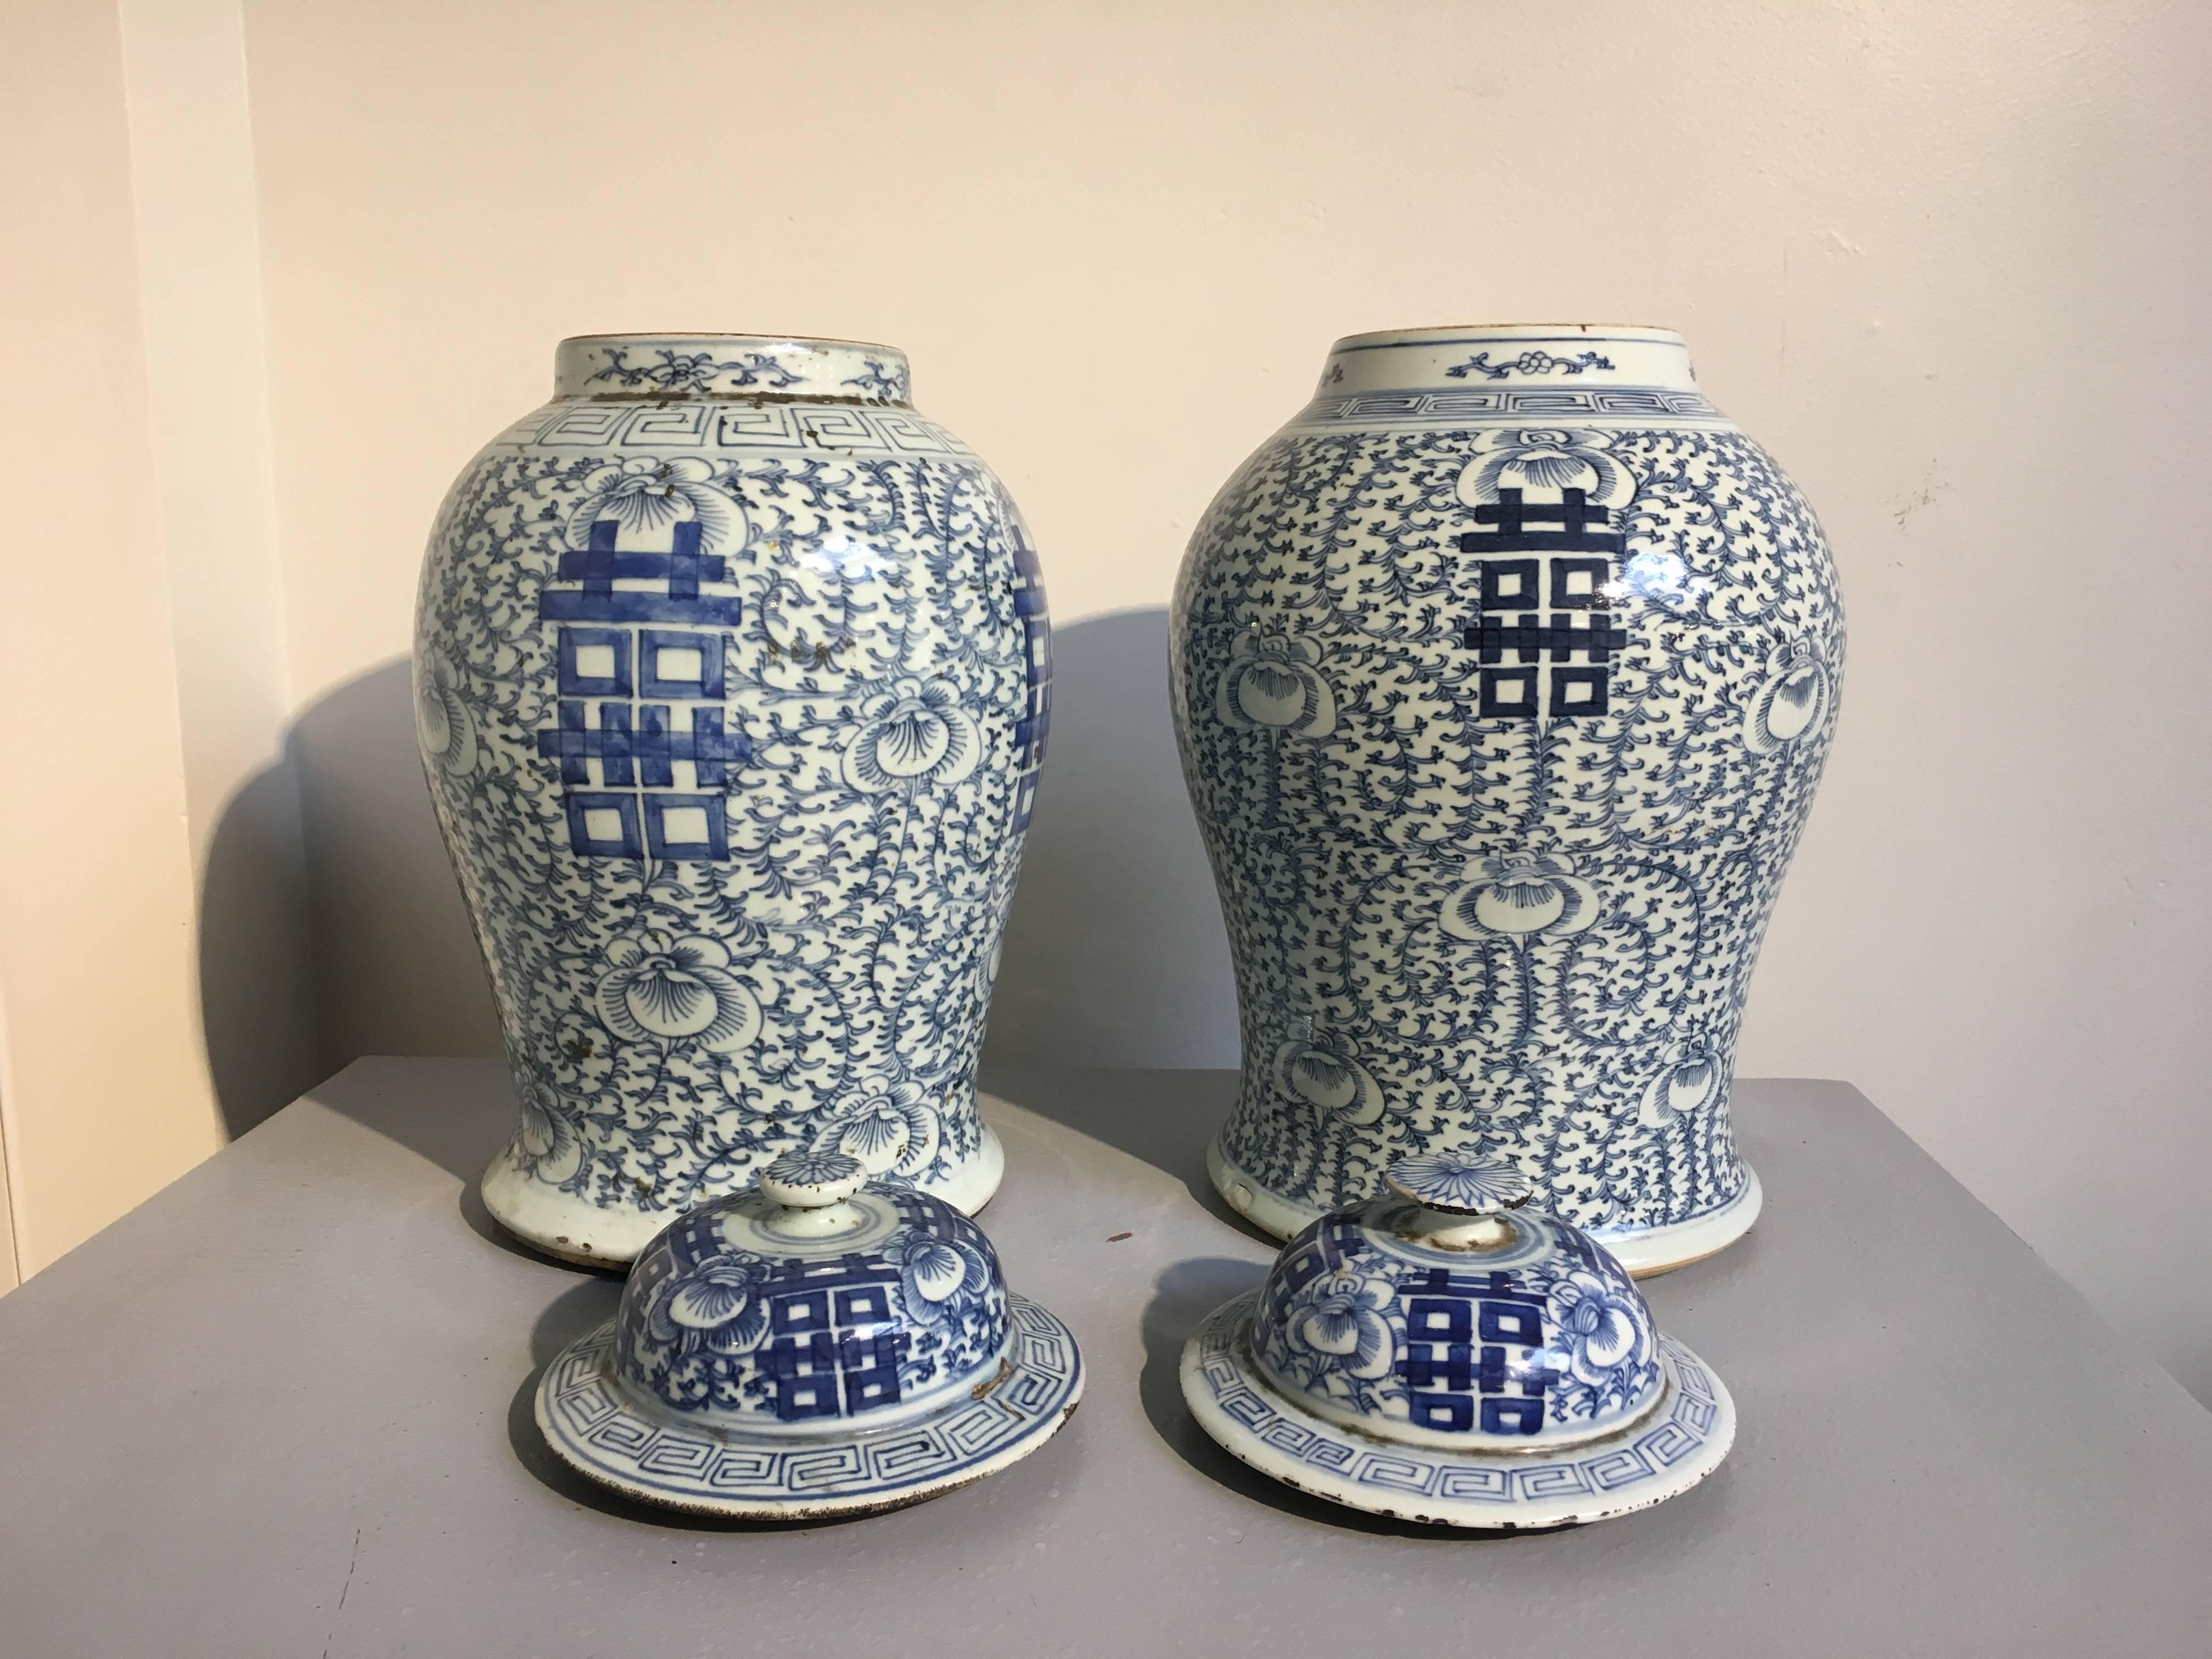 blue and white porcelain